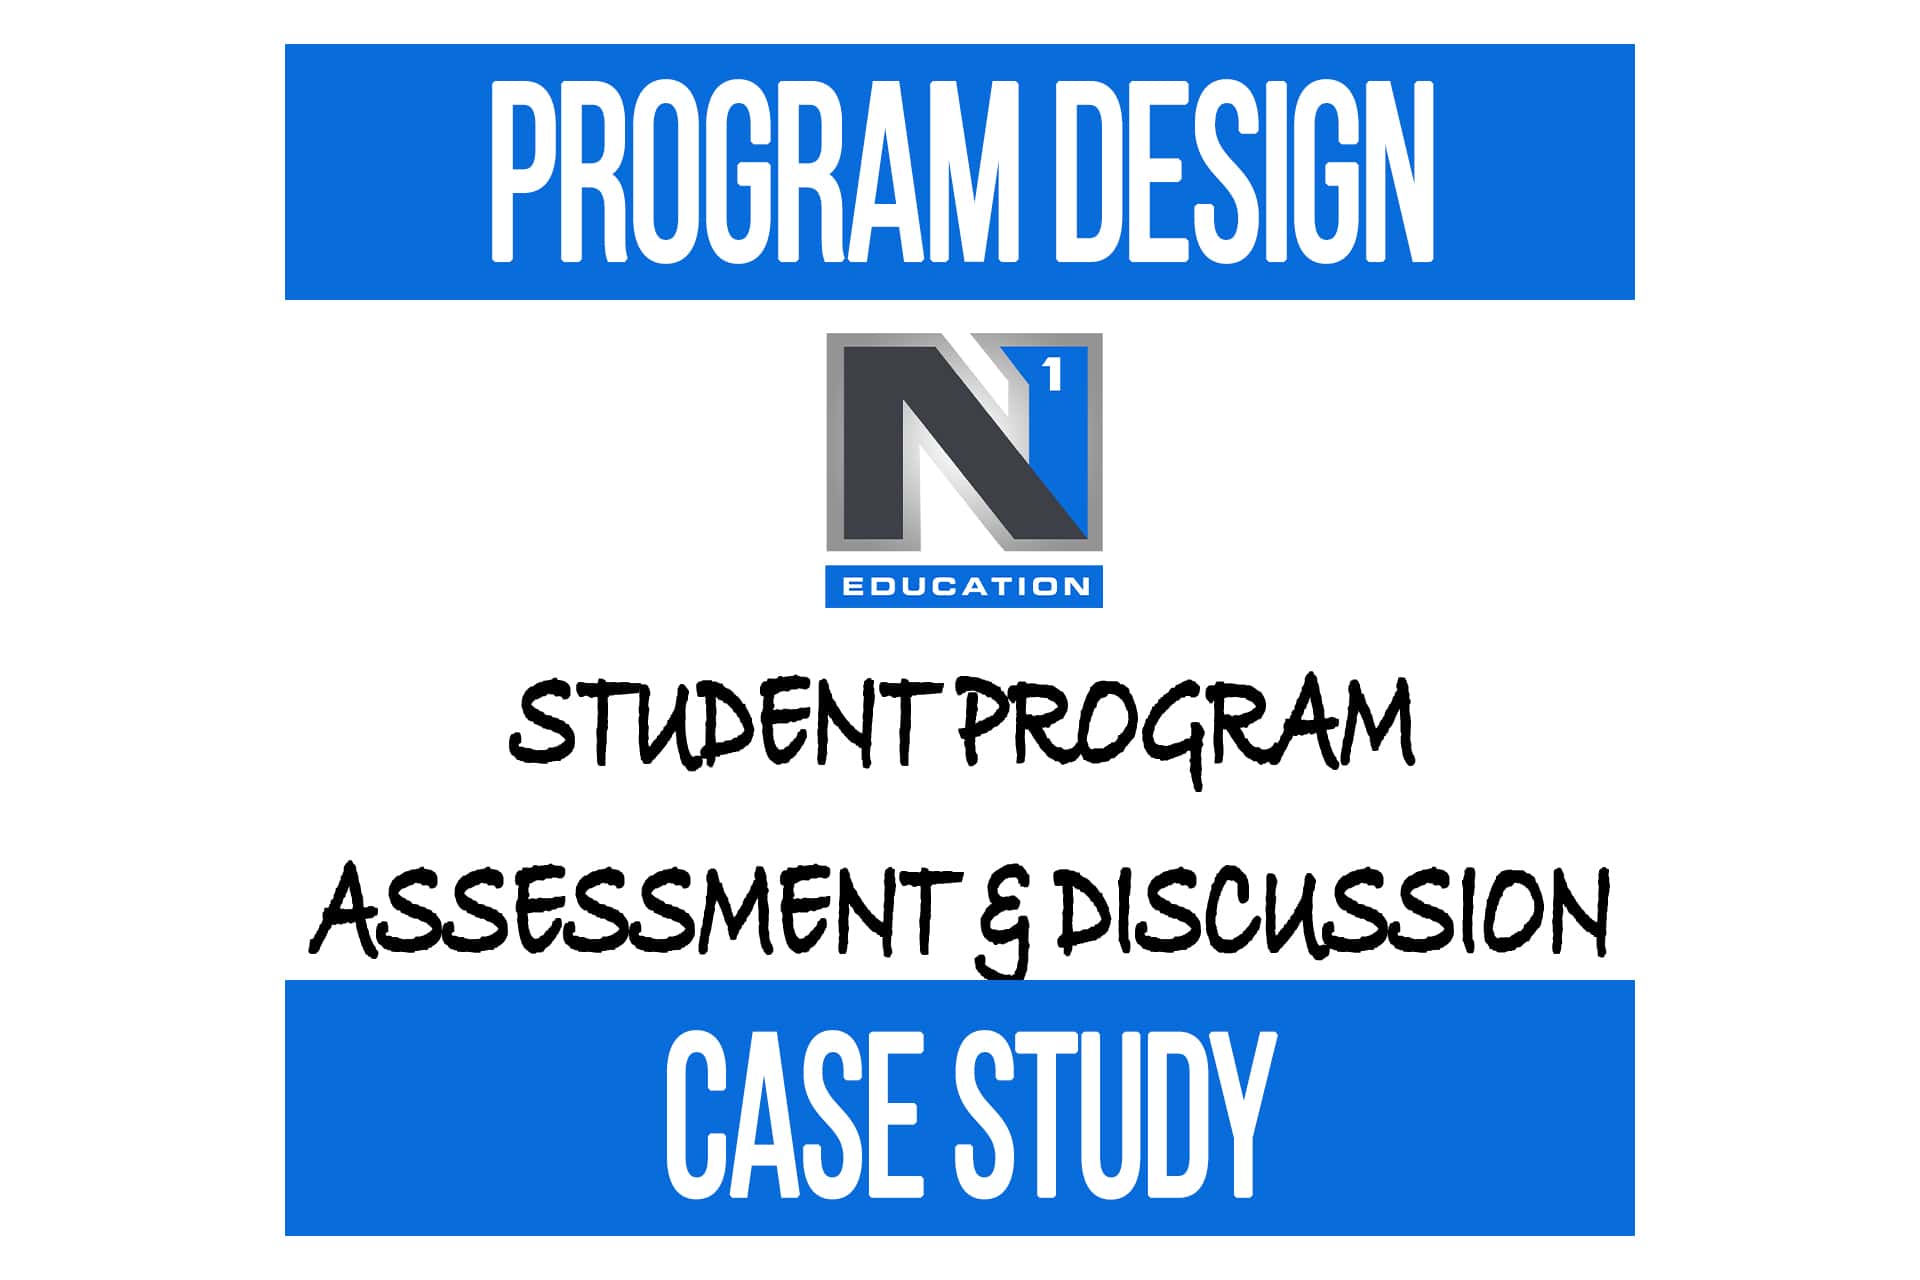 Program Design Case Study: Student Program Assessment & Discussion